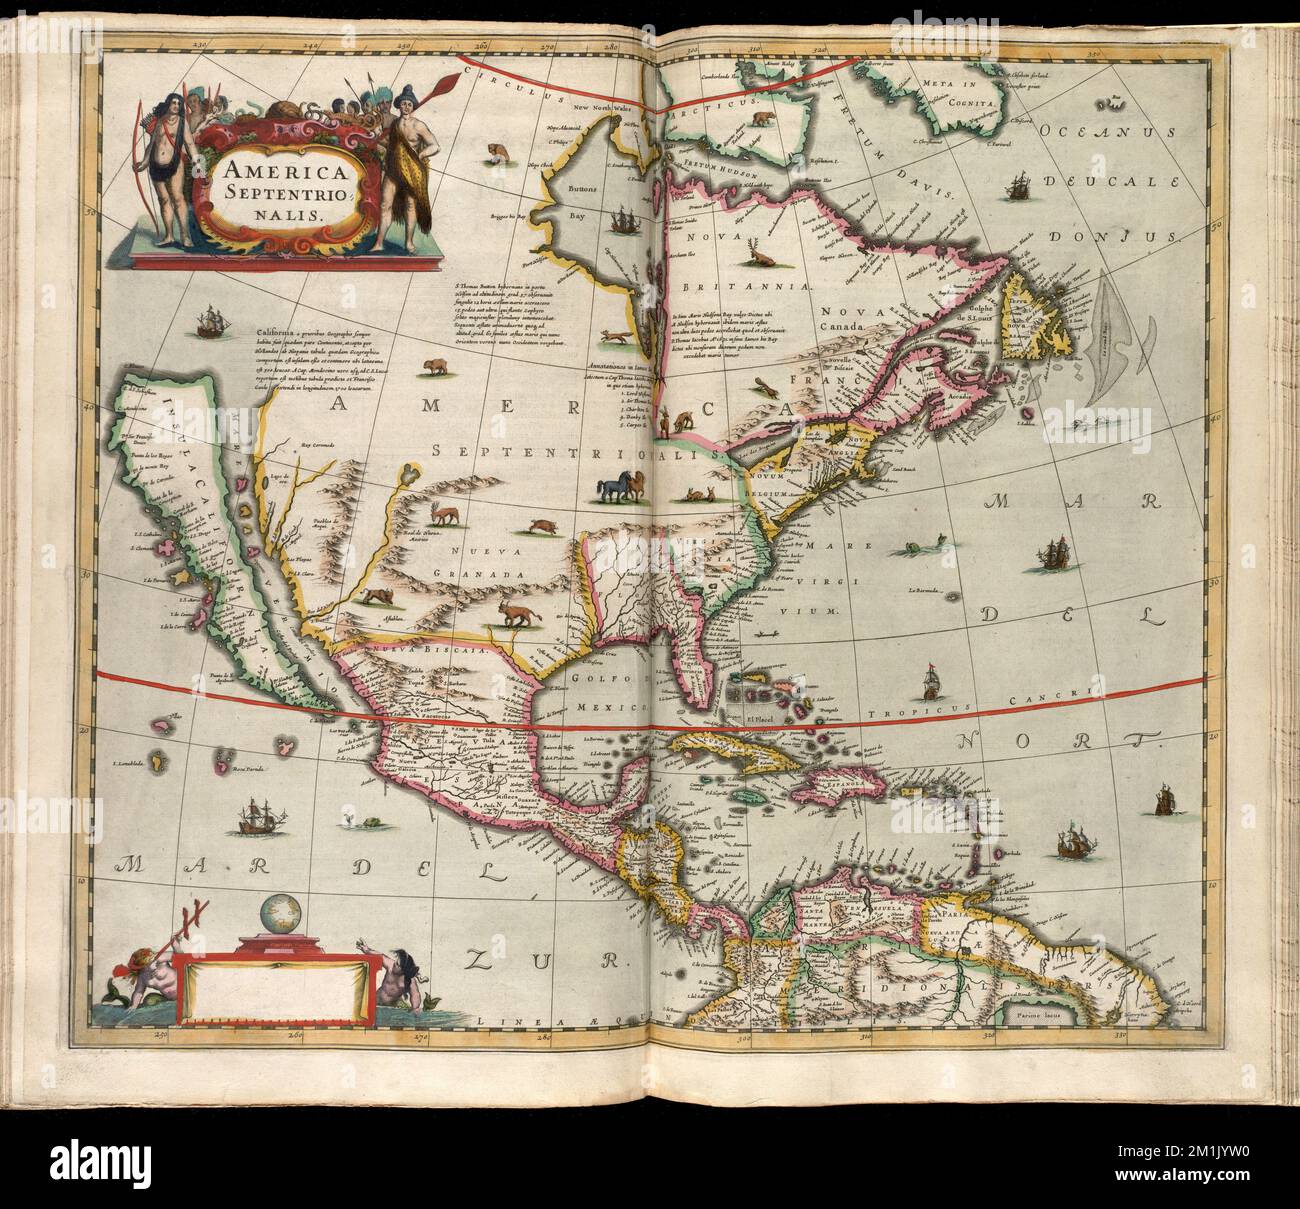 America septentrionalis, Nordamerika, Karten, frühe Werke 1800 Norman B. Leventhal Map Center Collection Stockfoto